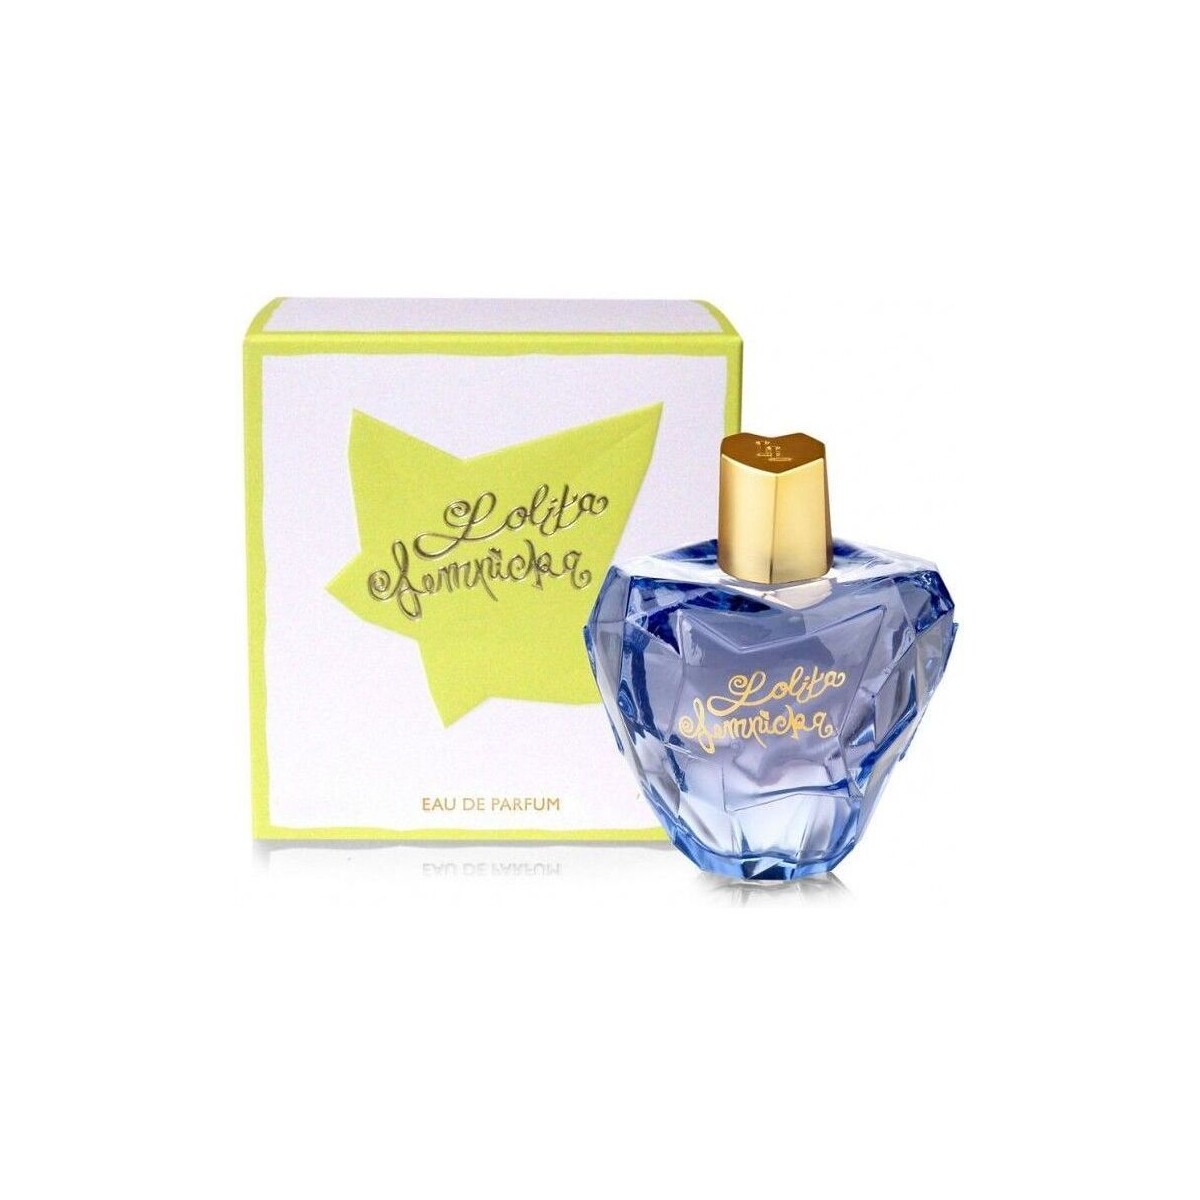 beleza Mulher Eau de parfum  Lolita Lempicka - perfume - 100ml - vaporizador Lolita Lempicka  - perfume - 100ml - spray